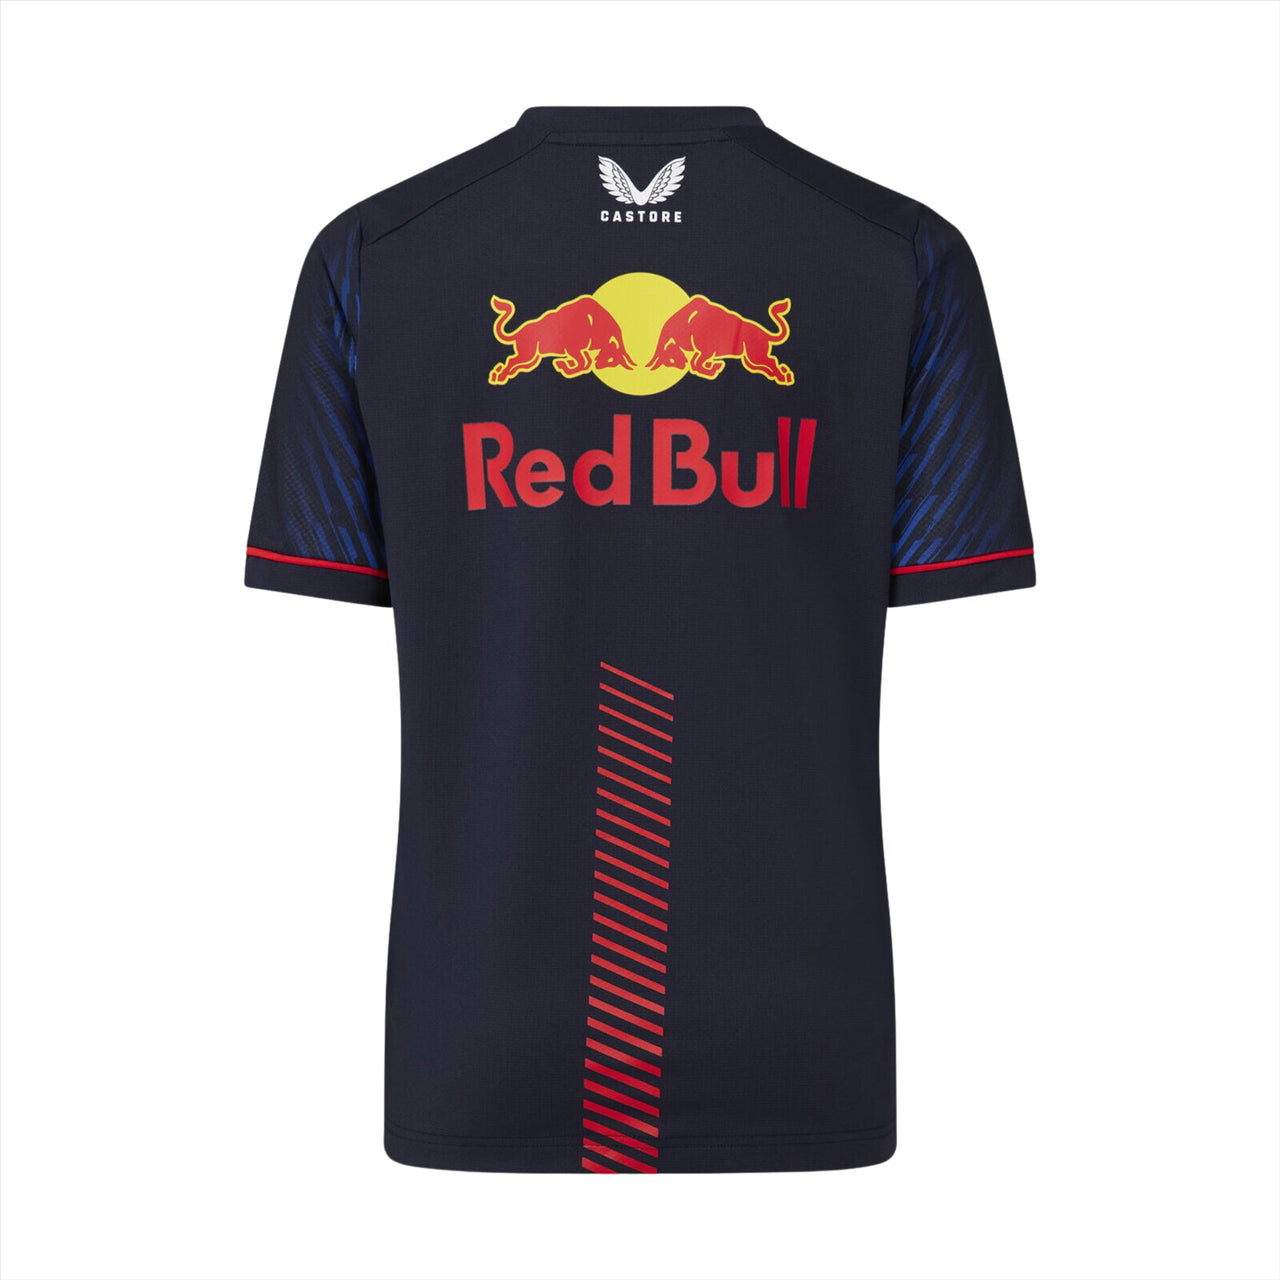 Oracle Red Bull Racing Junior Max Verstappen Driver T-Shirt | Navy | 2023